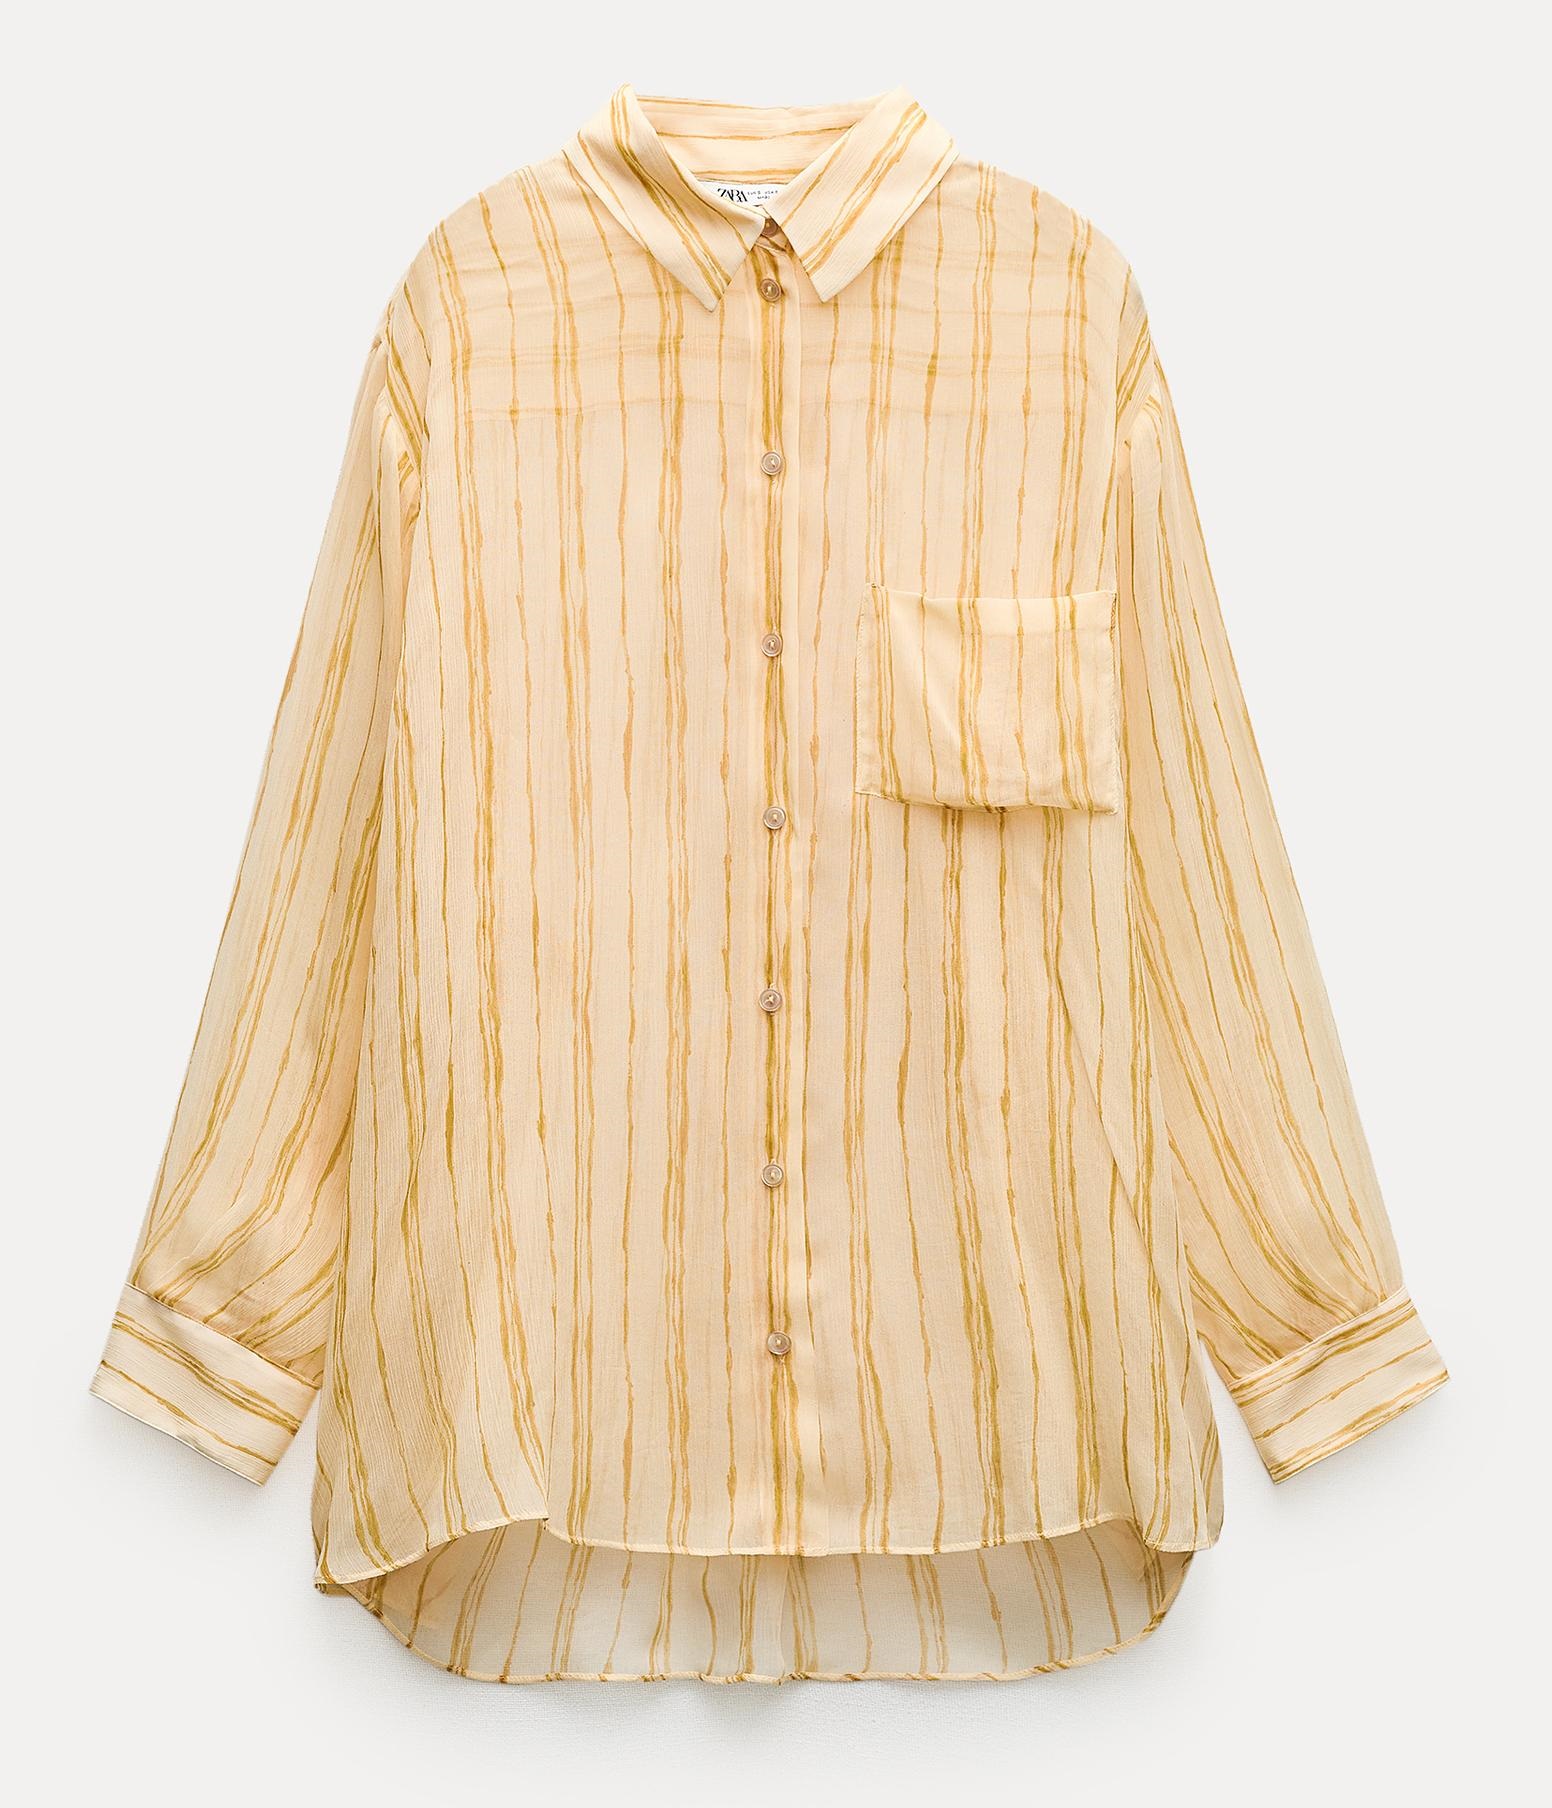 Рубашка Zara Zw Collection Striped With Pocket, мультиколор рубашка zara with lace pocket экрю